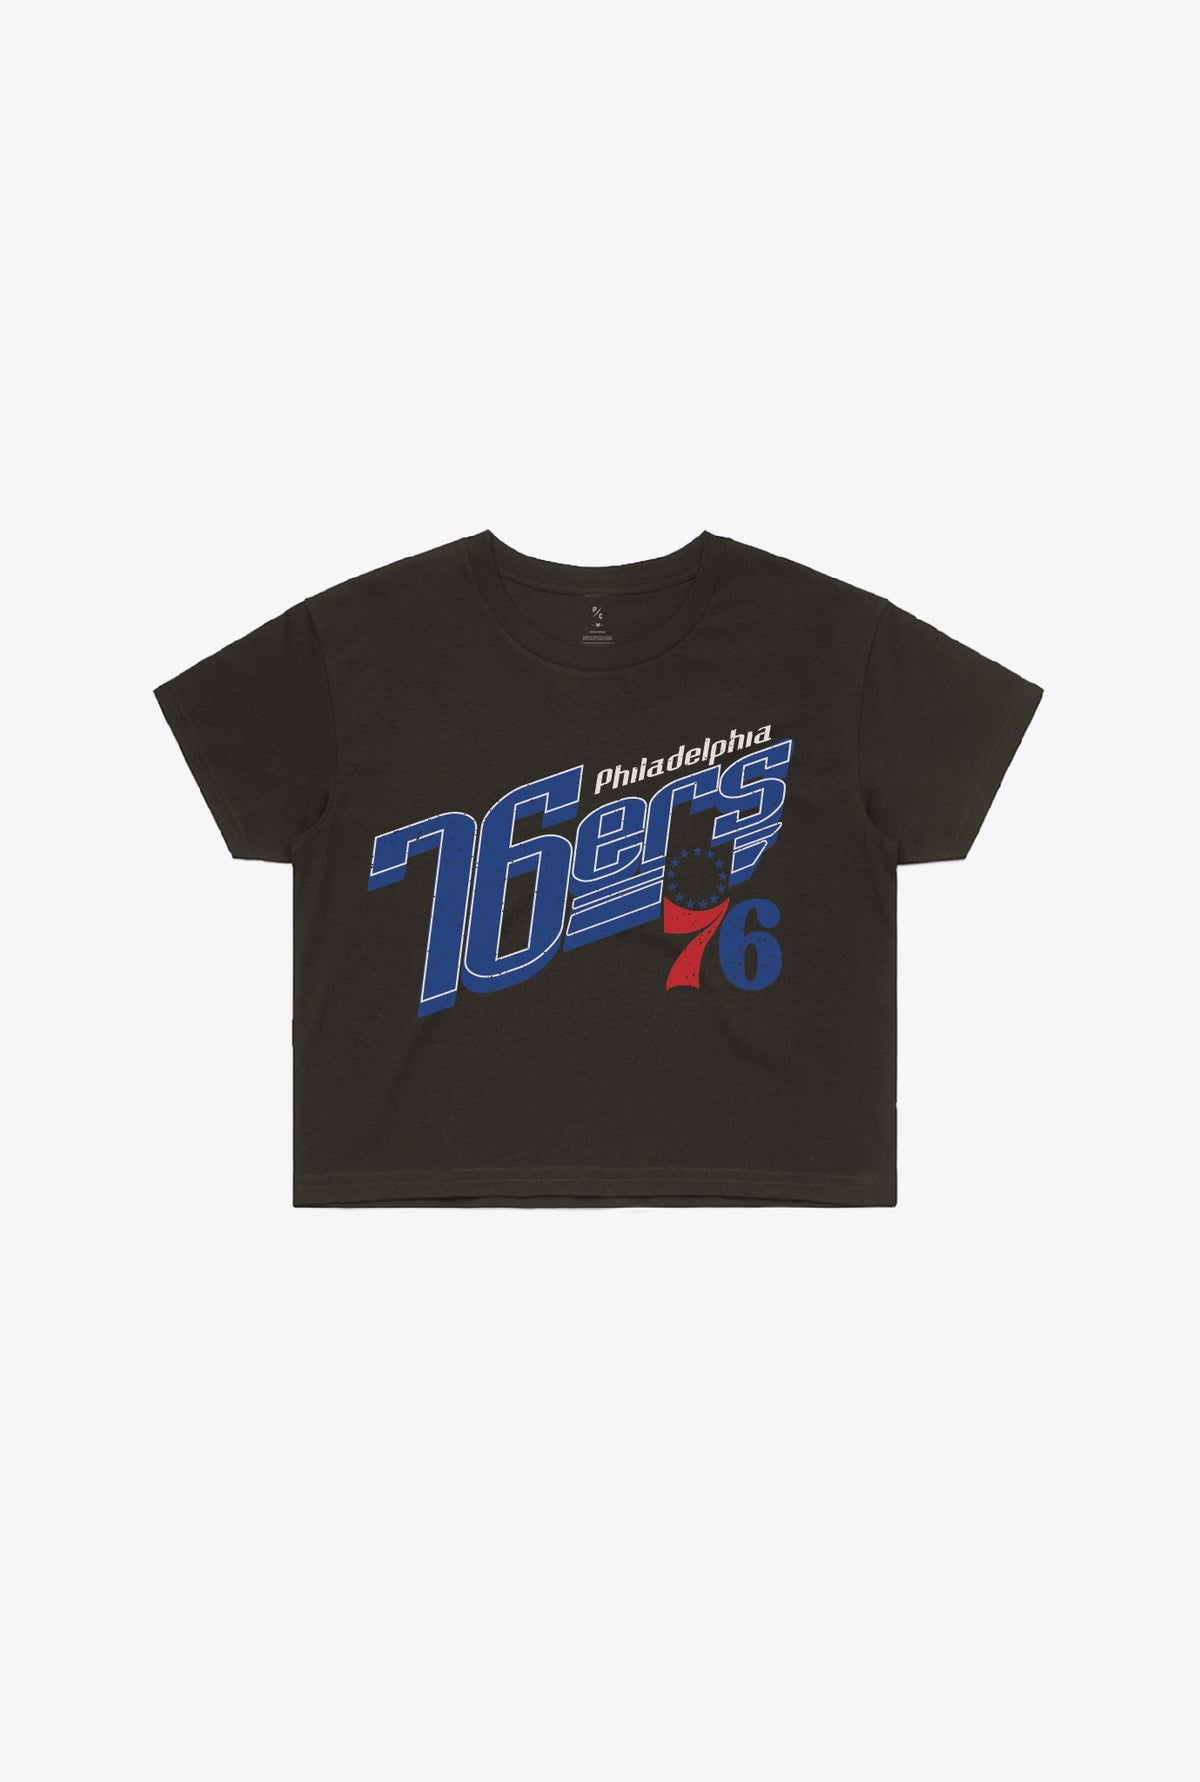 Philadelphia 76ers Garment Dyed Cropped T-Shirt - Black